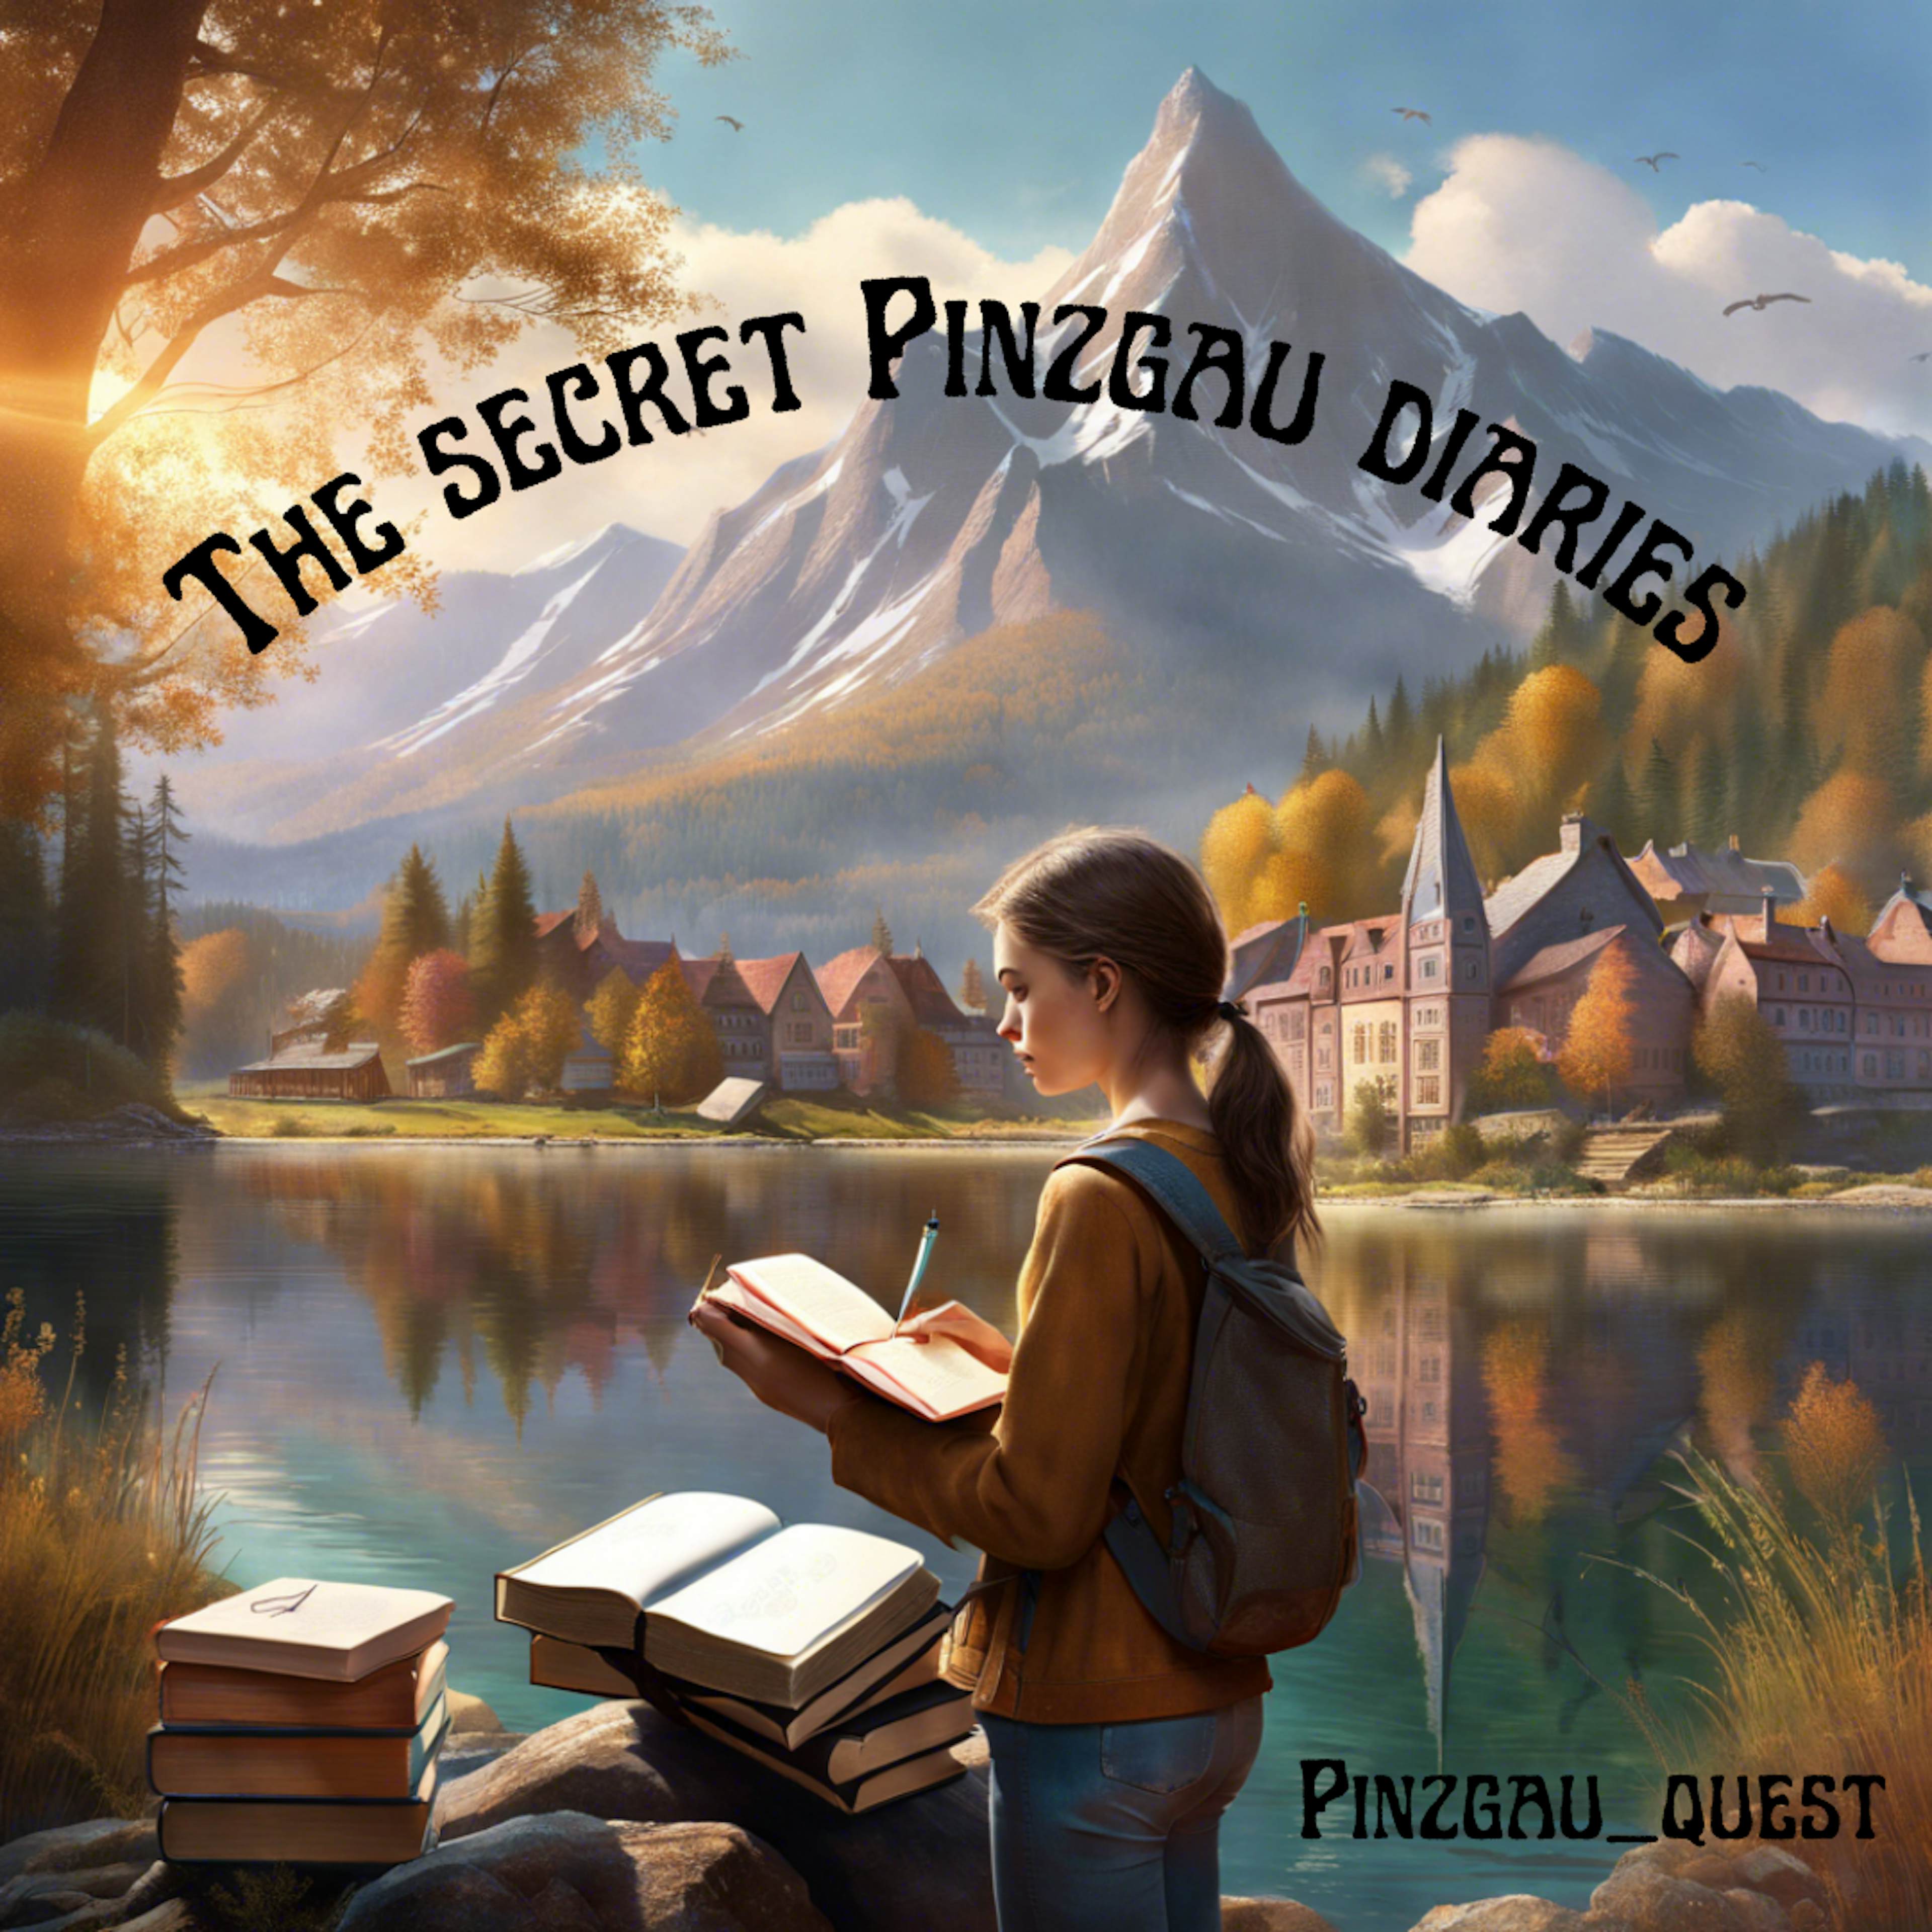 Pinzgau_Quest: The secret Pinzgau diaries in Zell am See